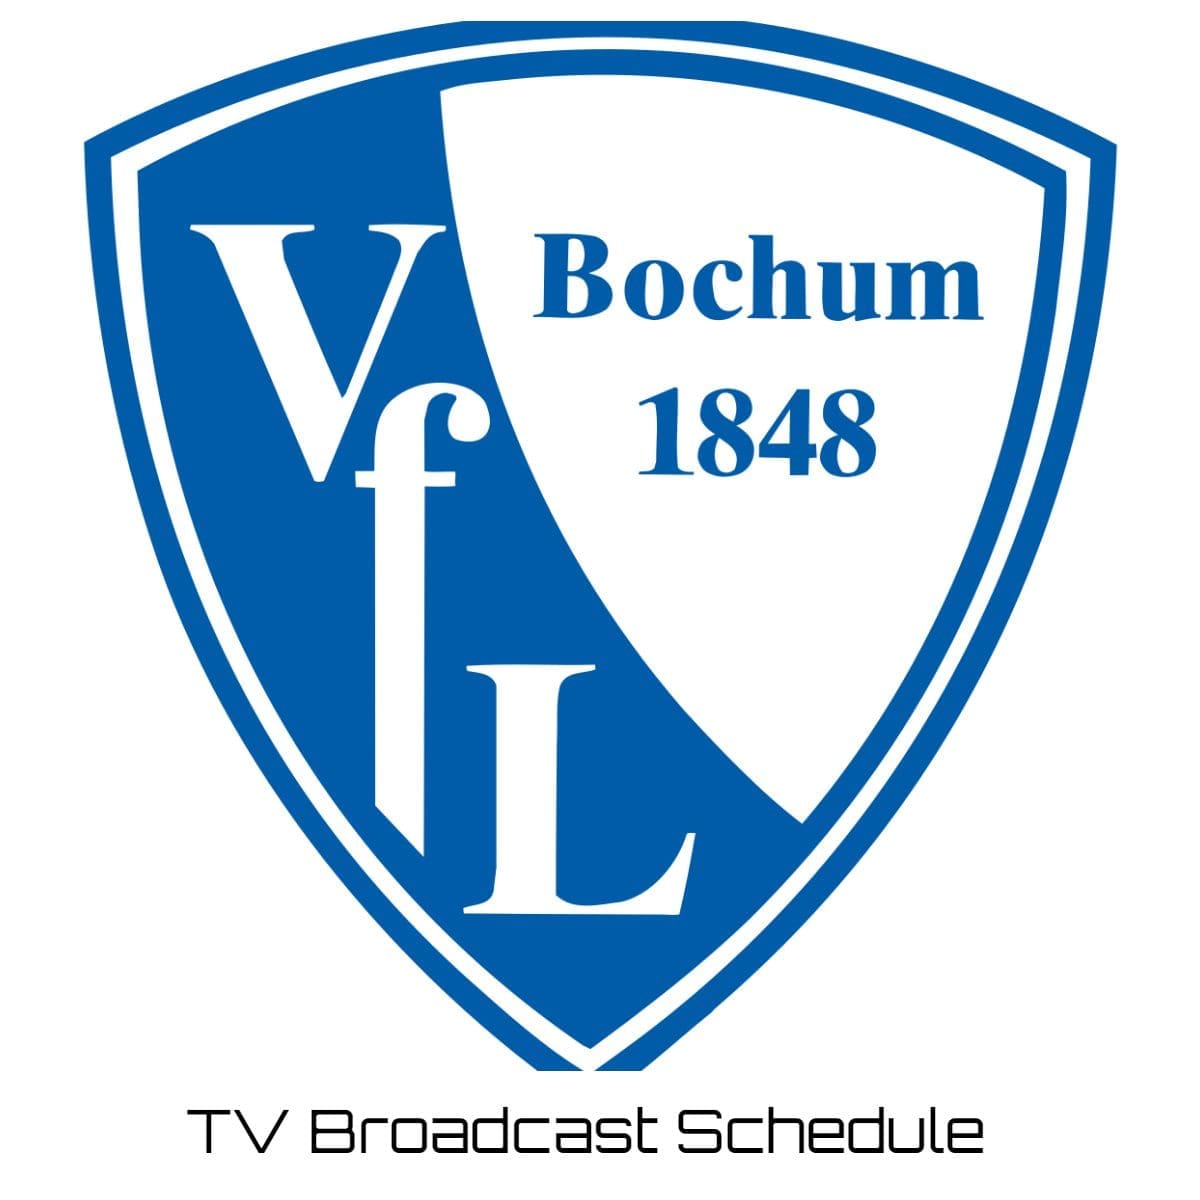 VfL Bochum TV Broadcast Schedule